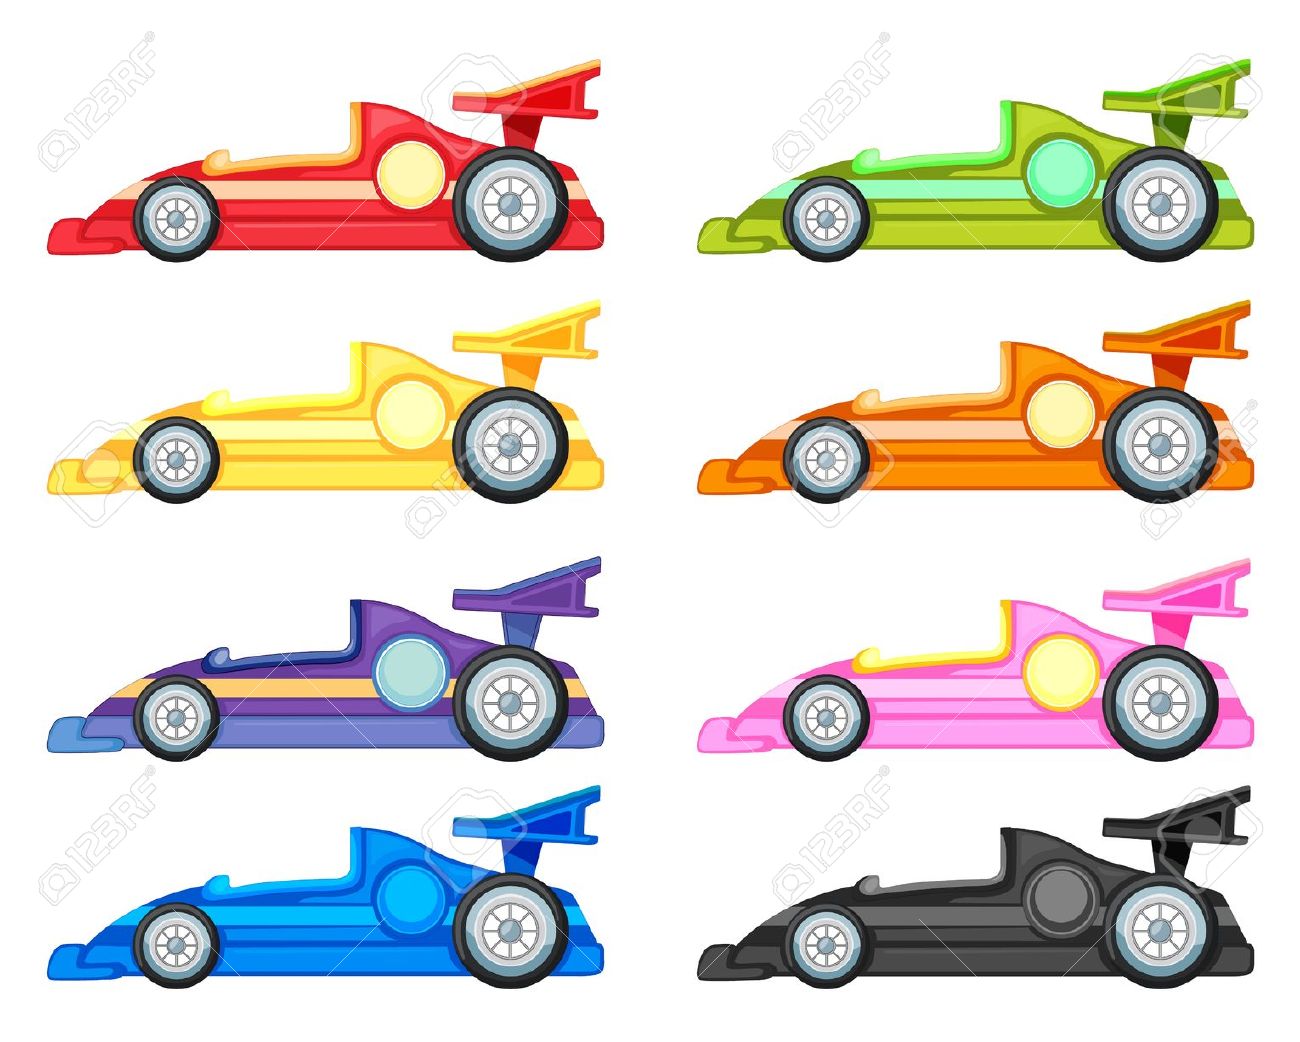 free clipart cartoon race cars - photo #21